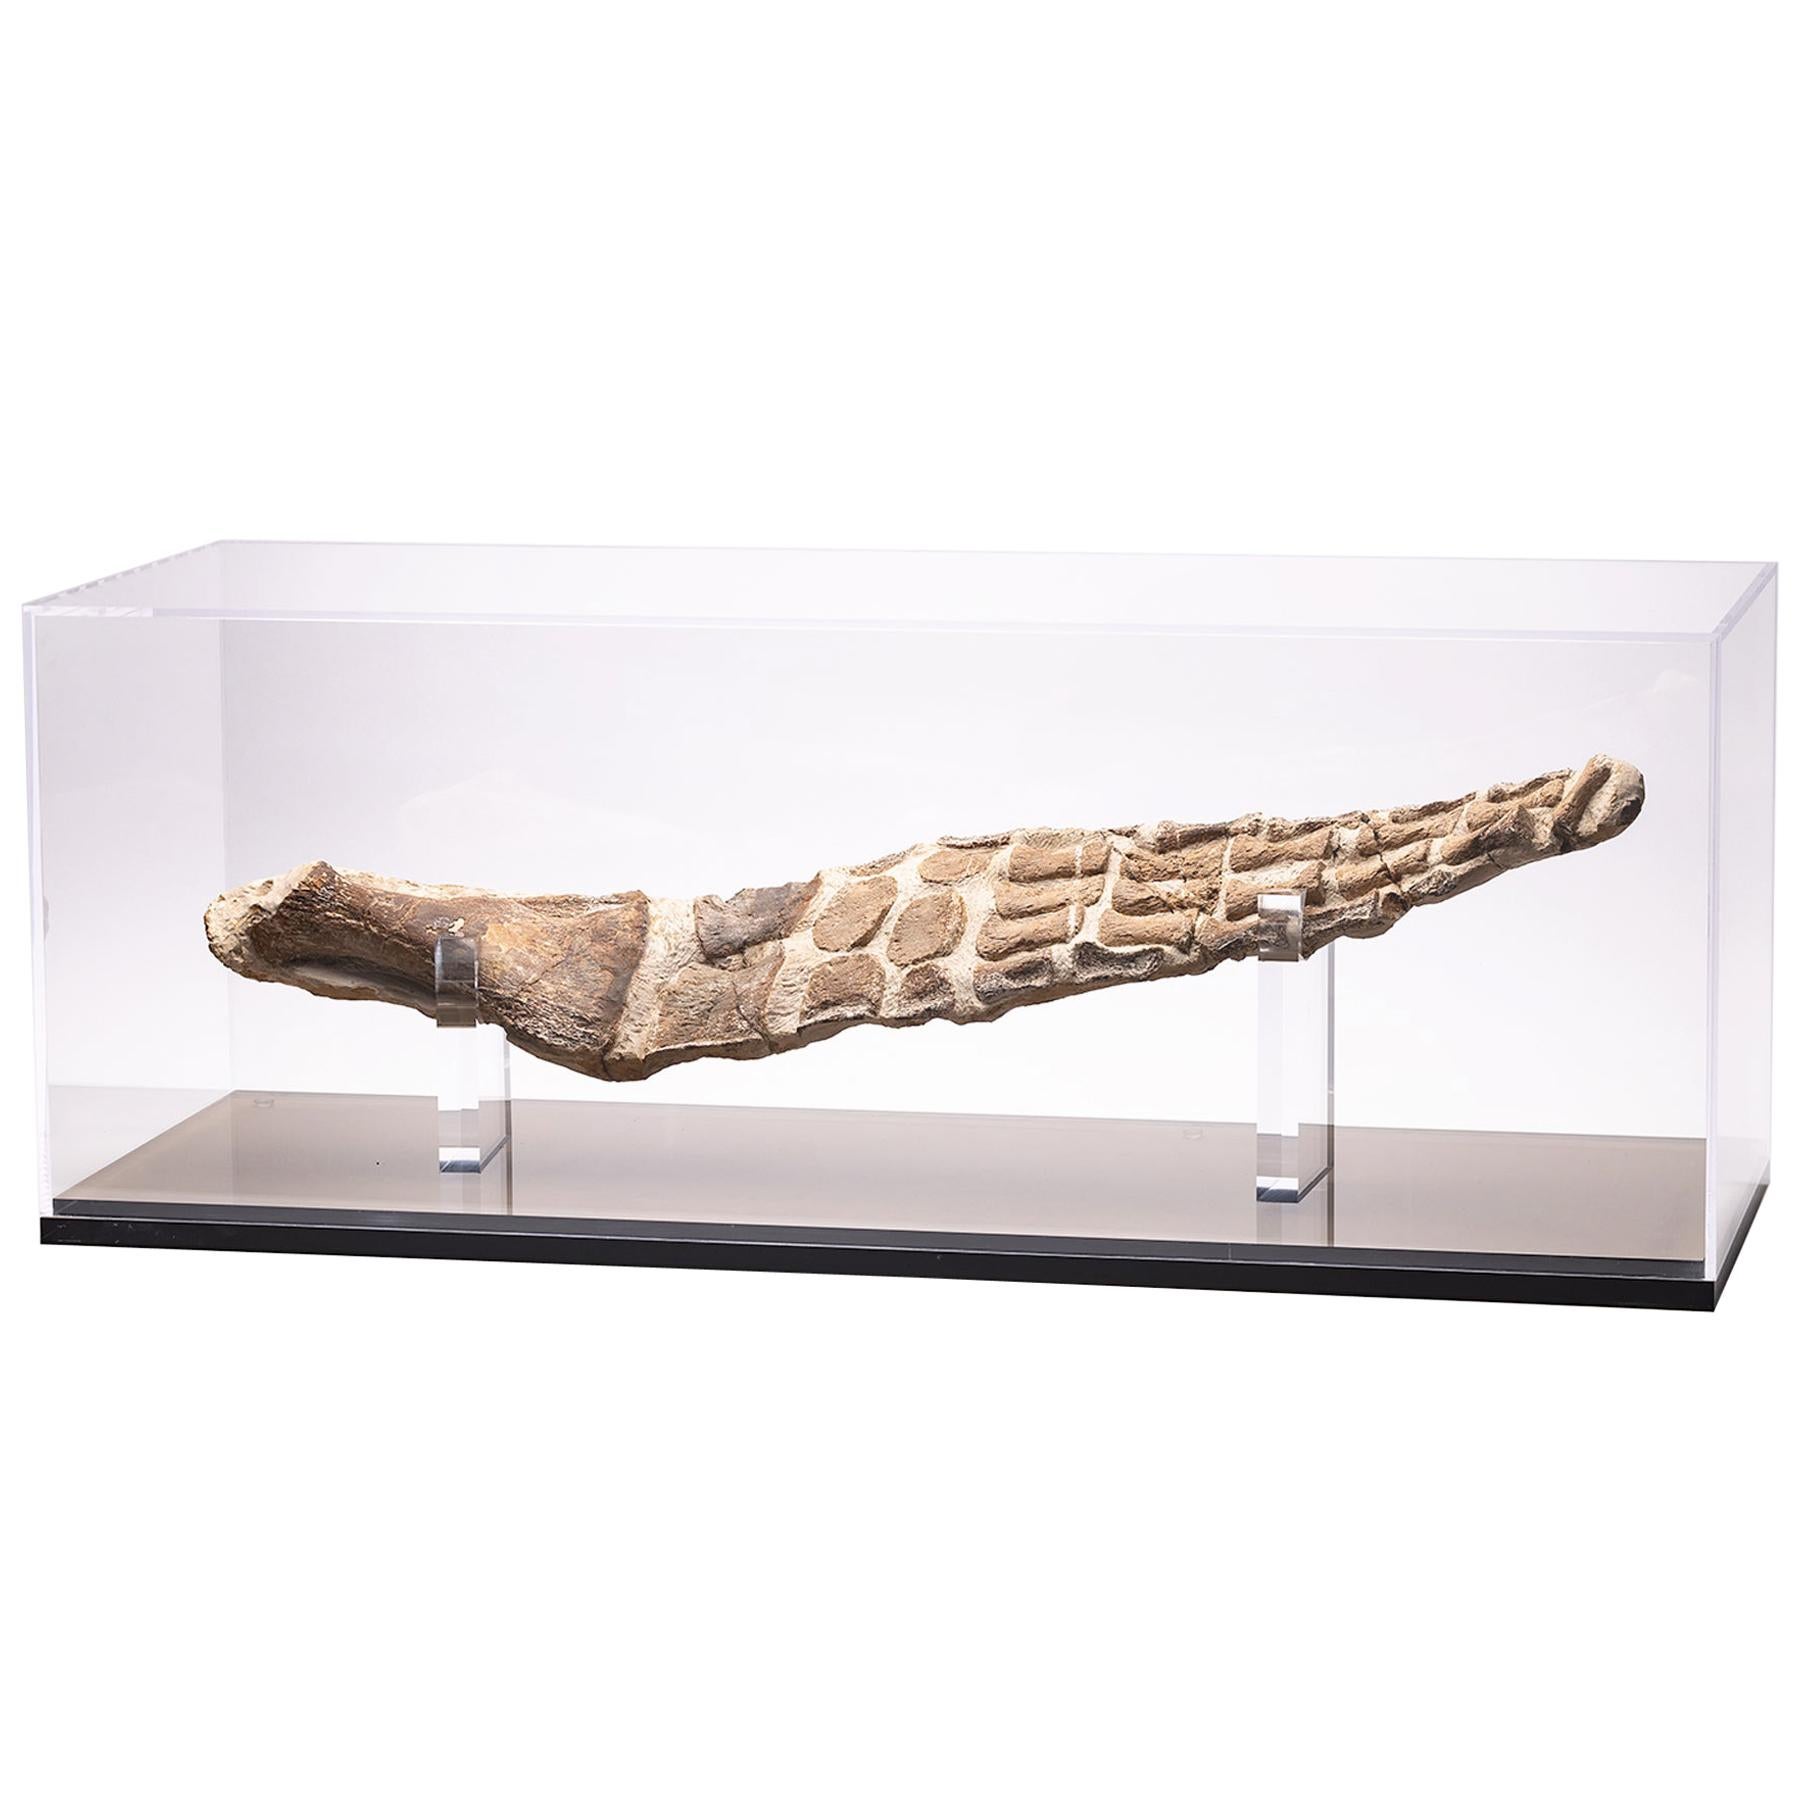 Original Plesiosaurs Flipper in Acrylic Box from Cretaceous Period